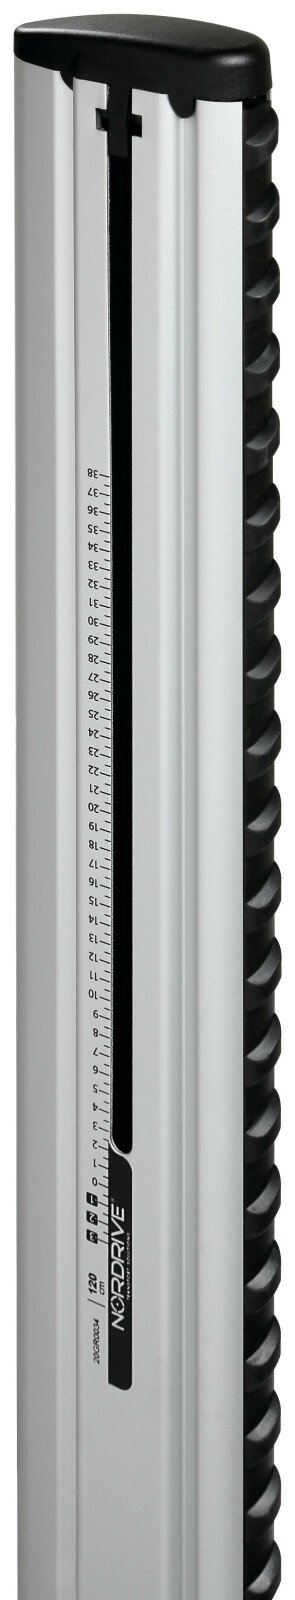 Silenzio aluminium csomagtartórúd szett, 2 db - L - 128 cm thumb